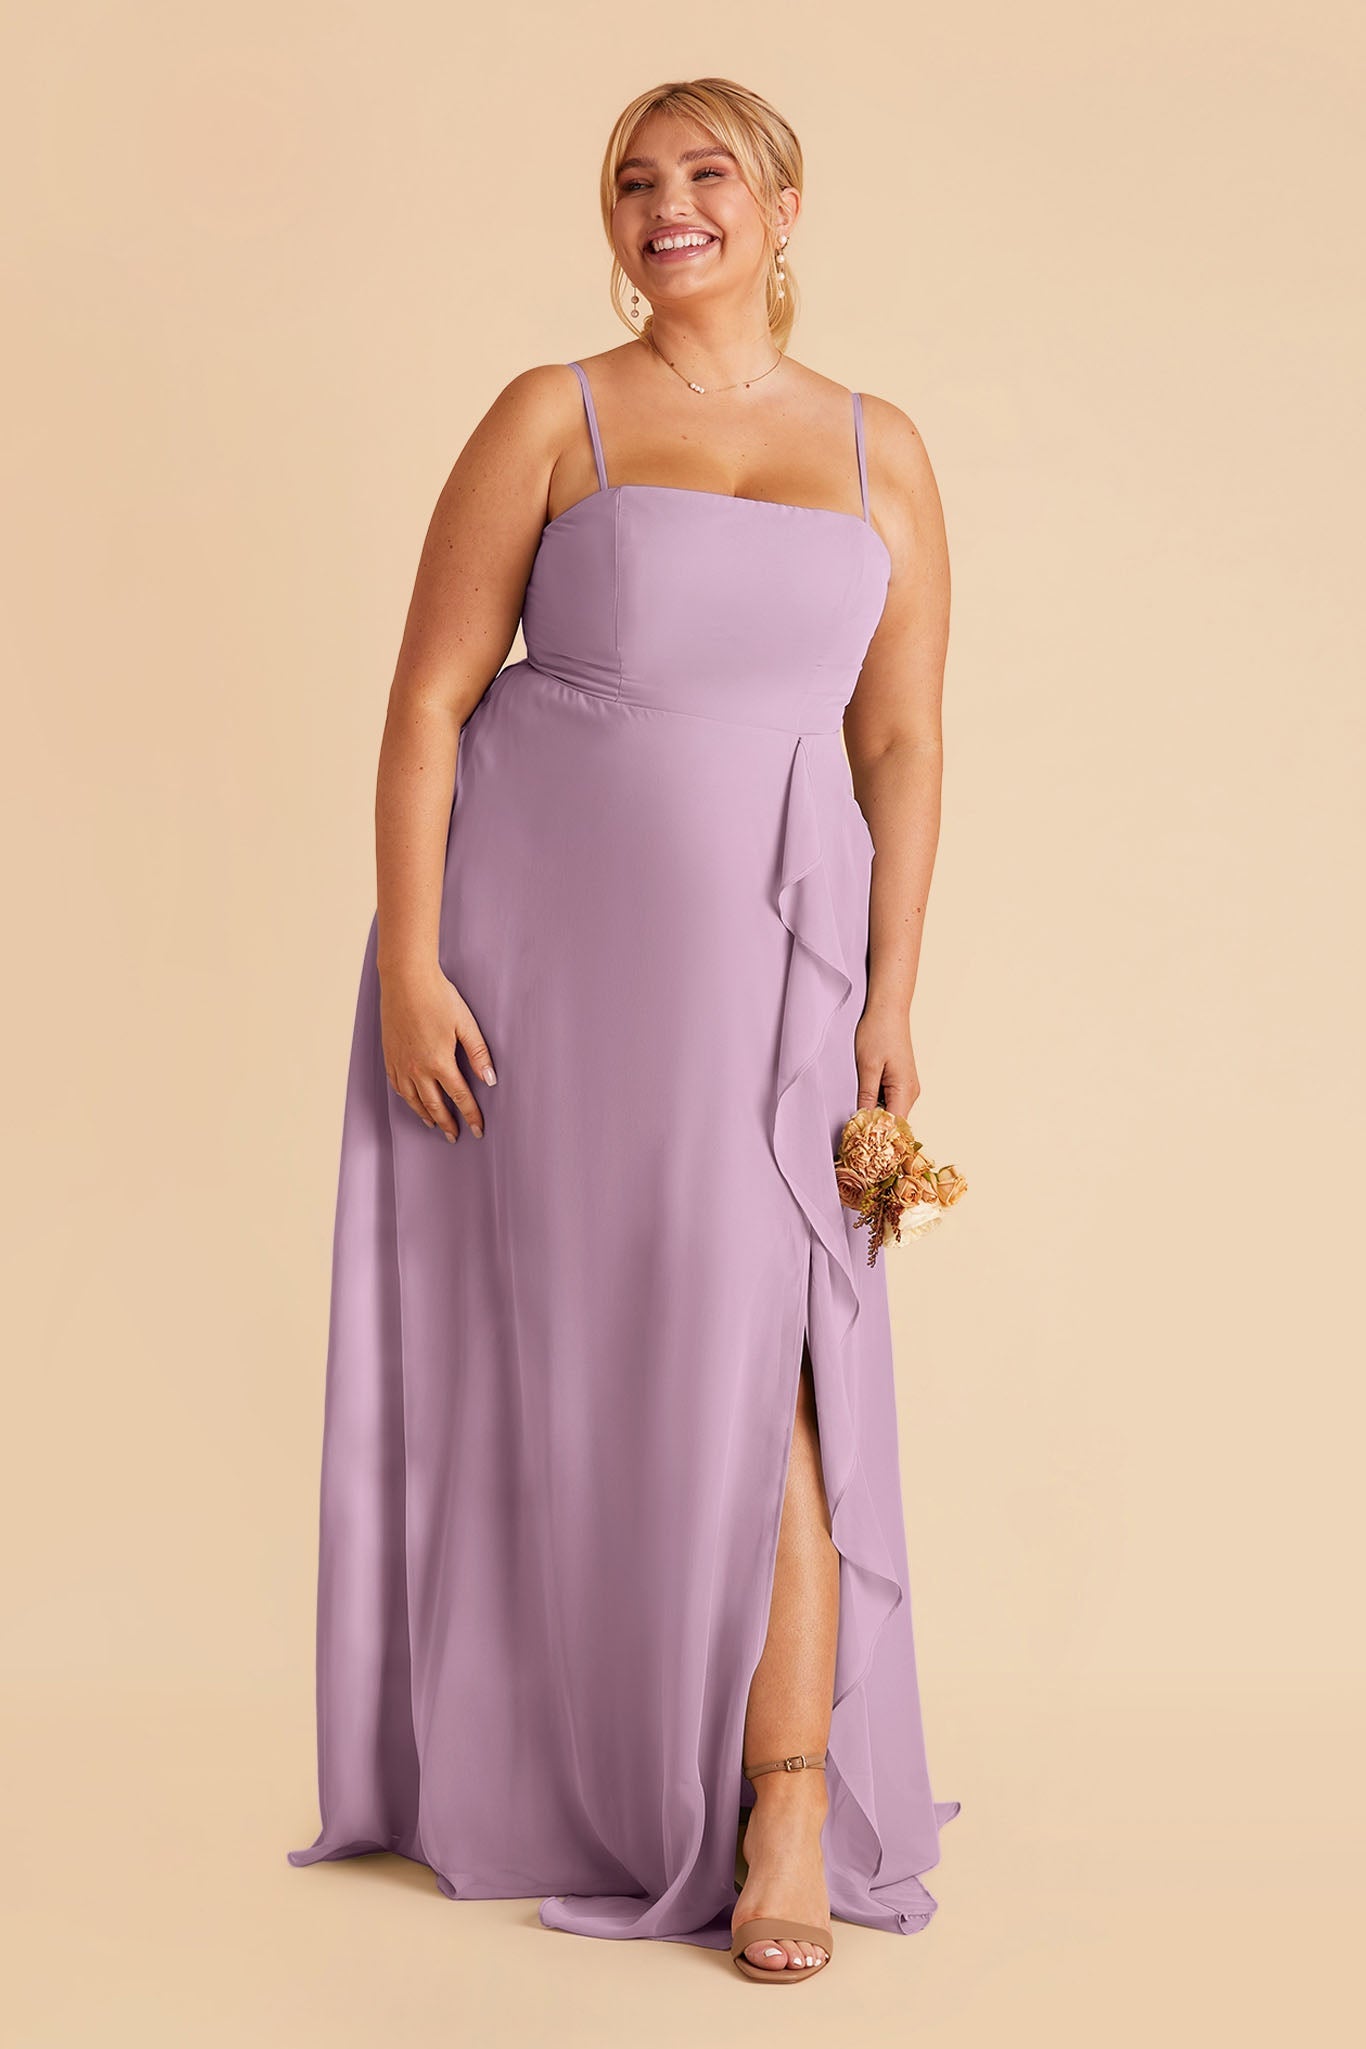 Winnie Convertible Chiffon Dress - Lavender